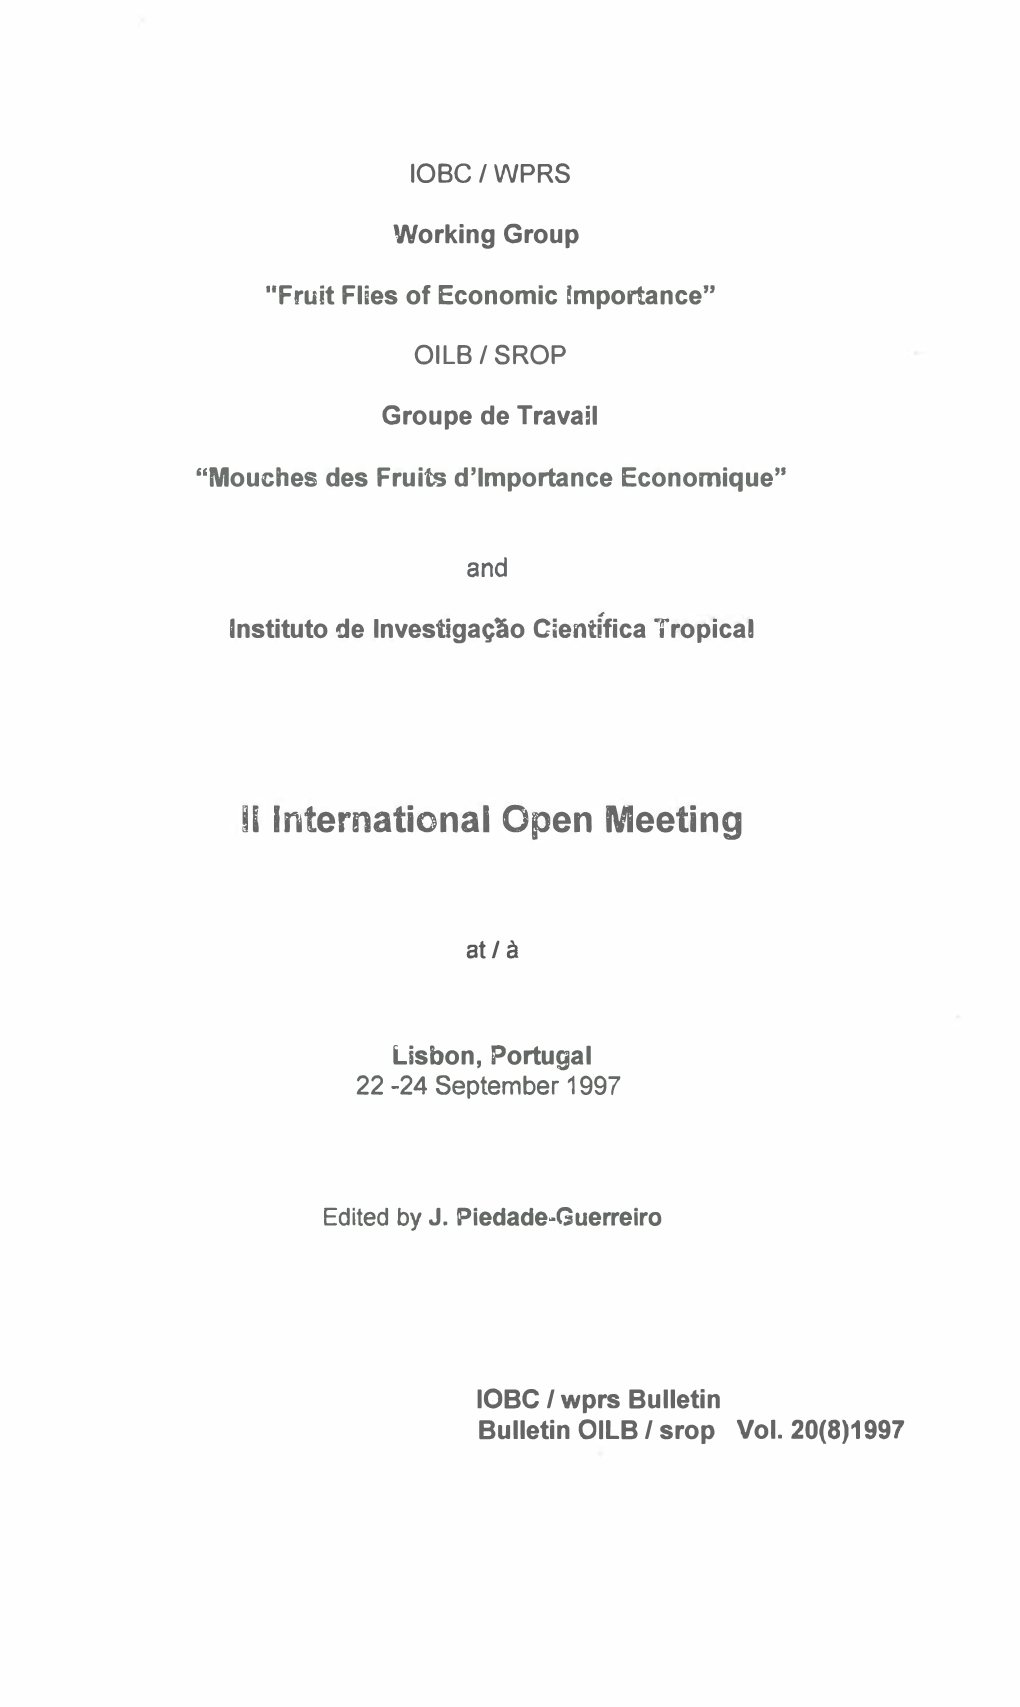 II International Open Meeting